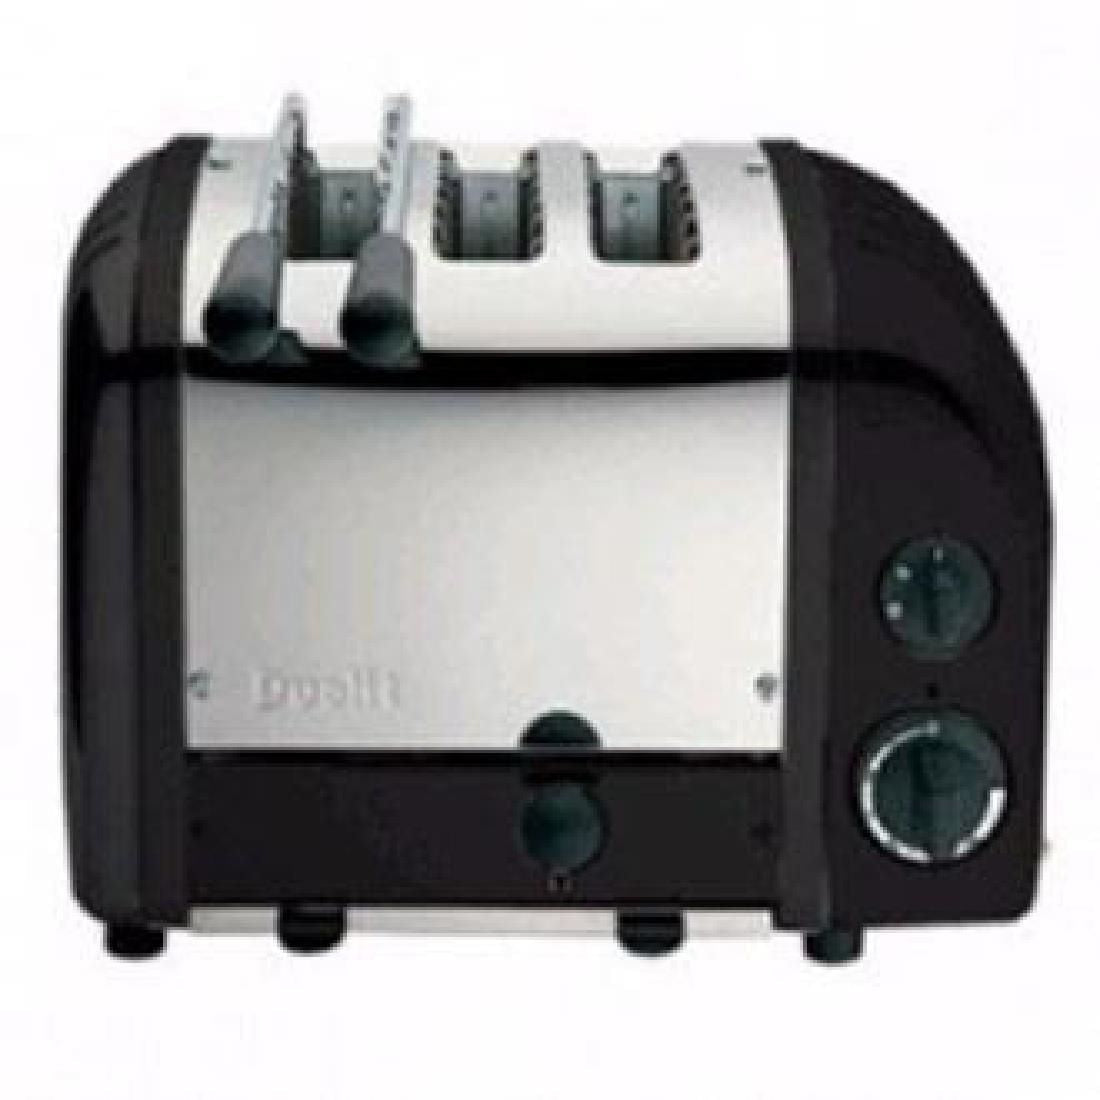 Dualit 2 + 1 Combi Vario 3 Slice Toaster Black 31205 JD Catering Equipment Solutions Ltd